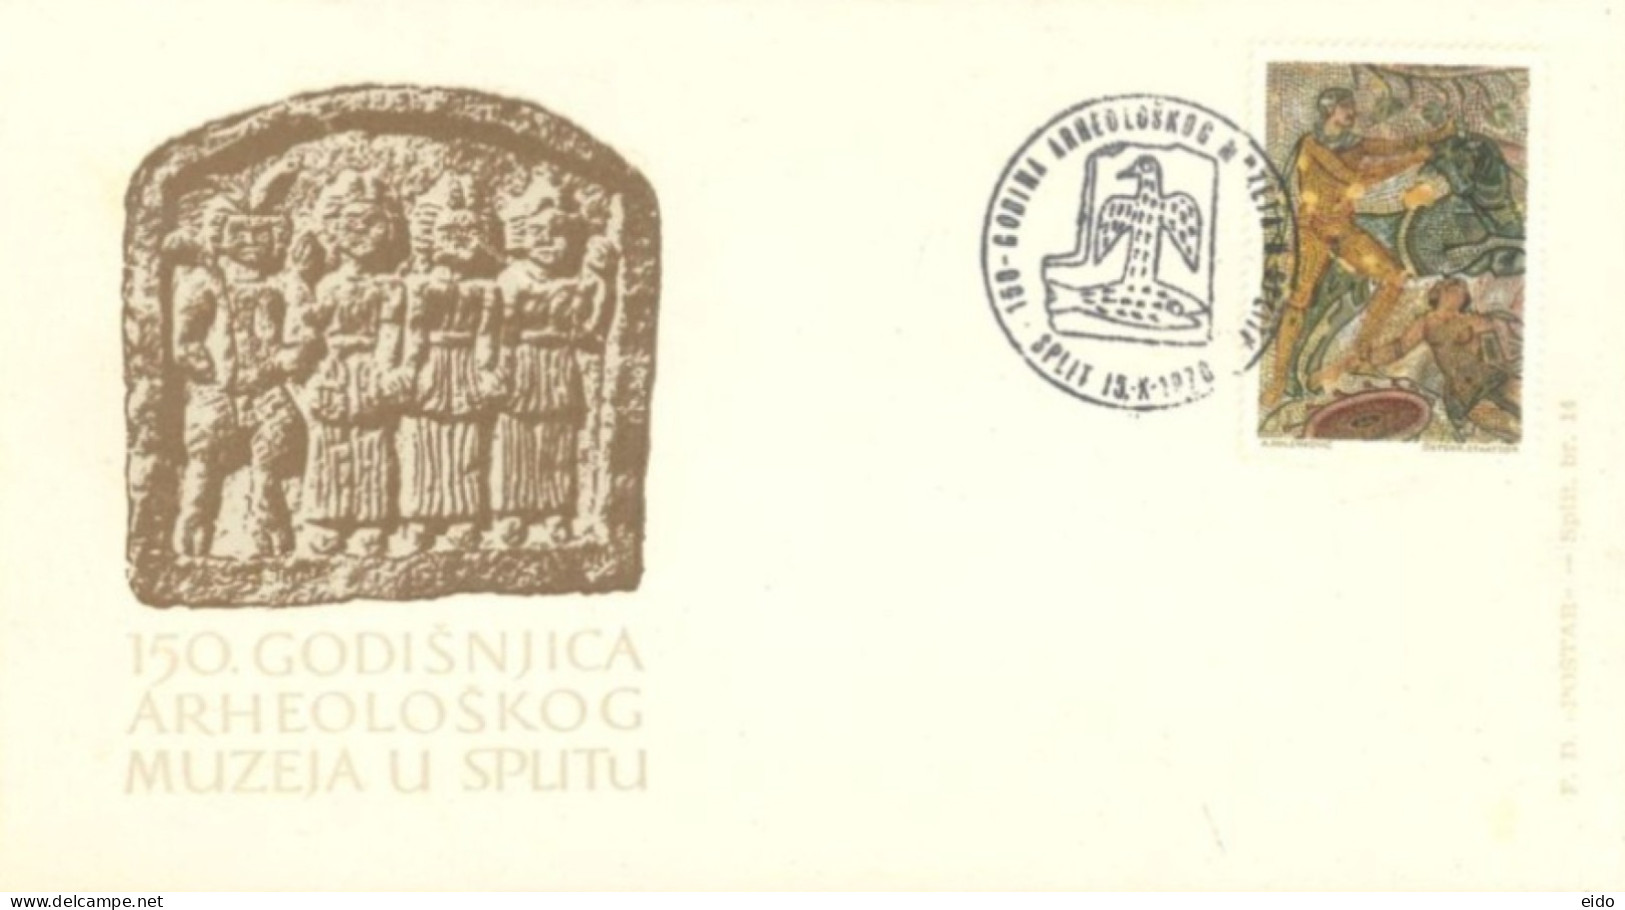 YUGOSLAVIA  - 1970, FDC STAMP OF150 GODINKA  ARCHAEOLOGICAL MUSEUM OF SPLIT WITH DESCRIPTION LEAFLET. - Brieven En Documenten